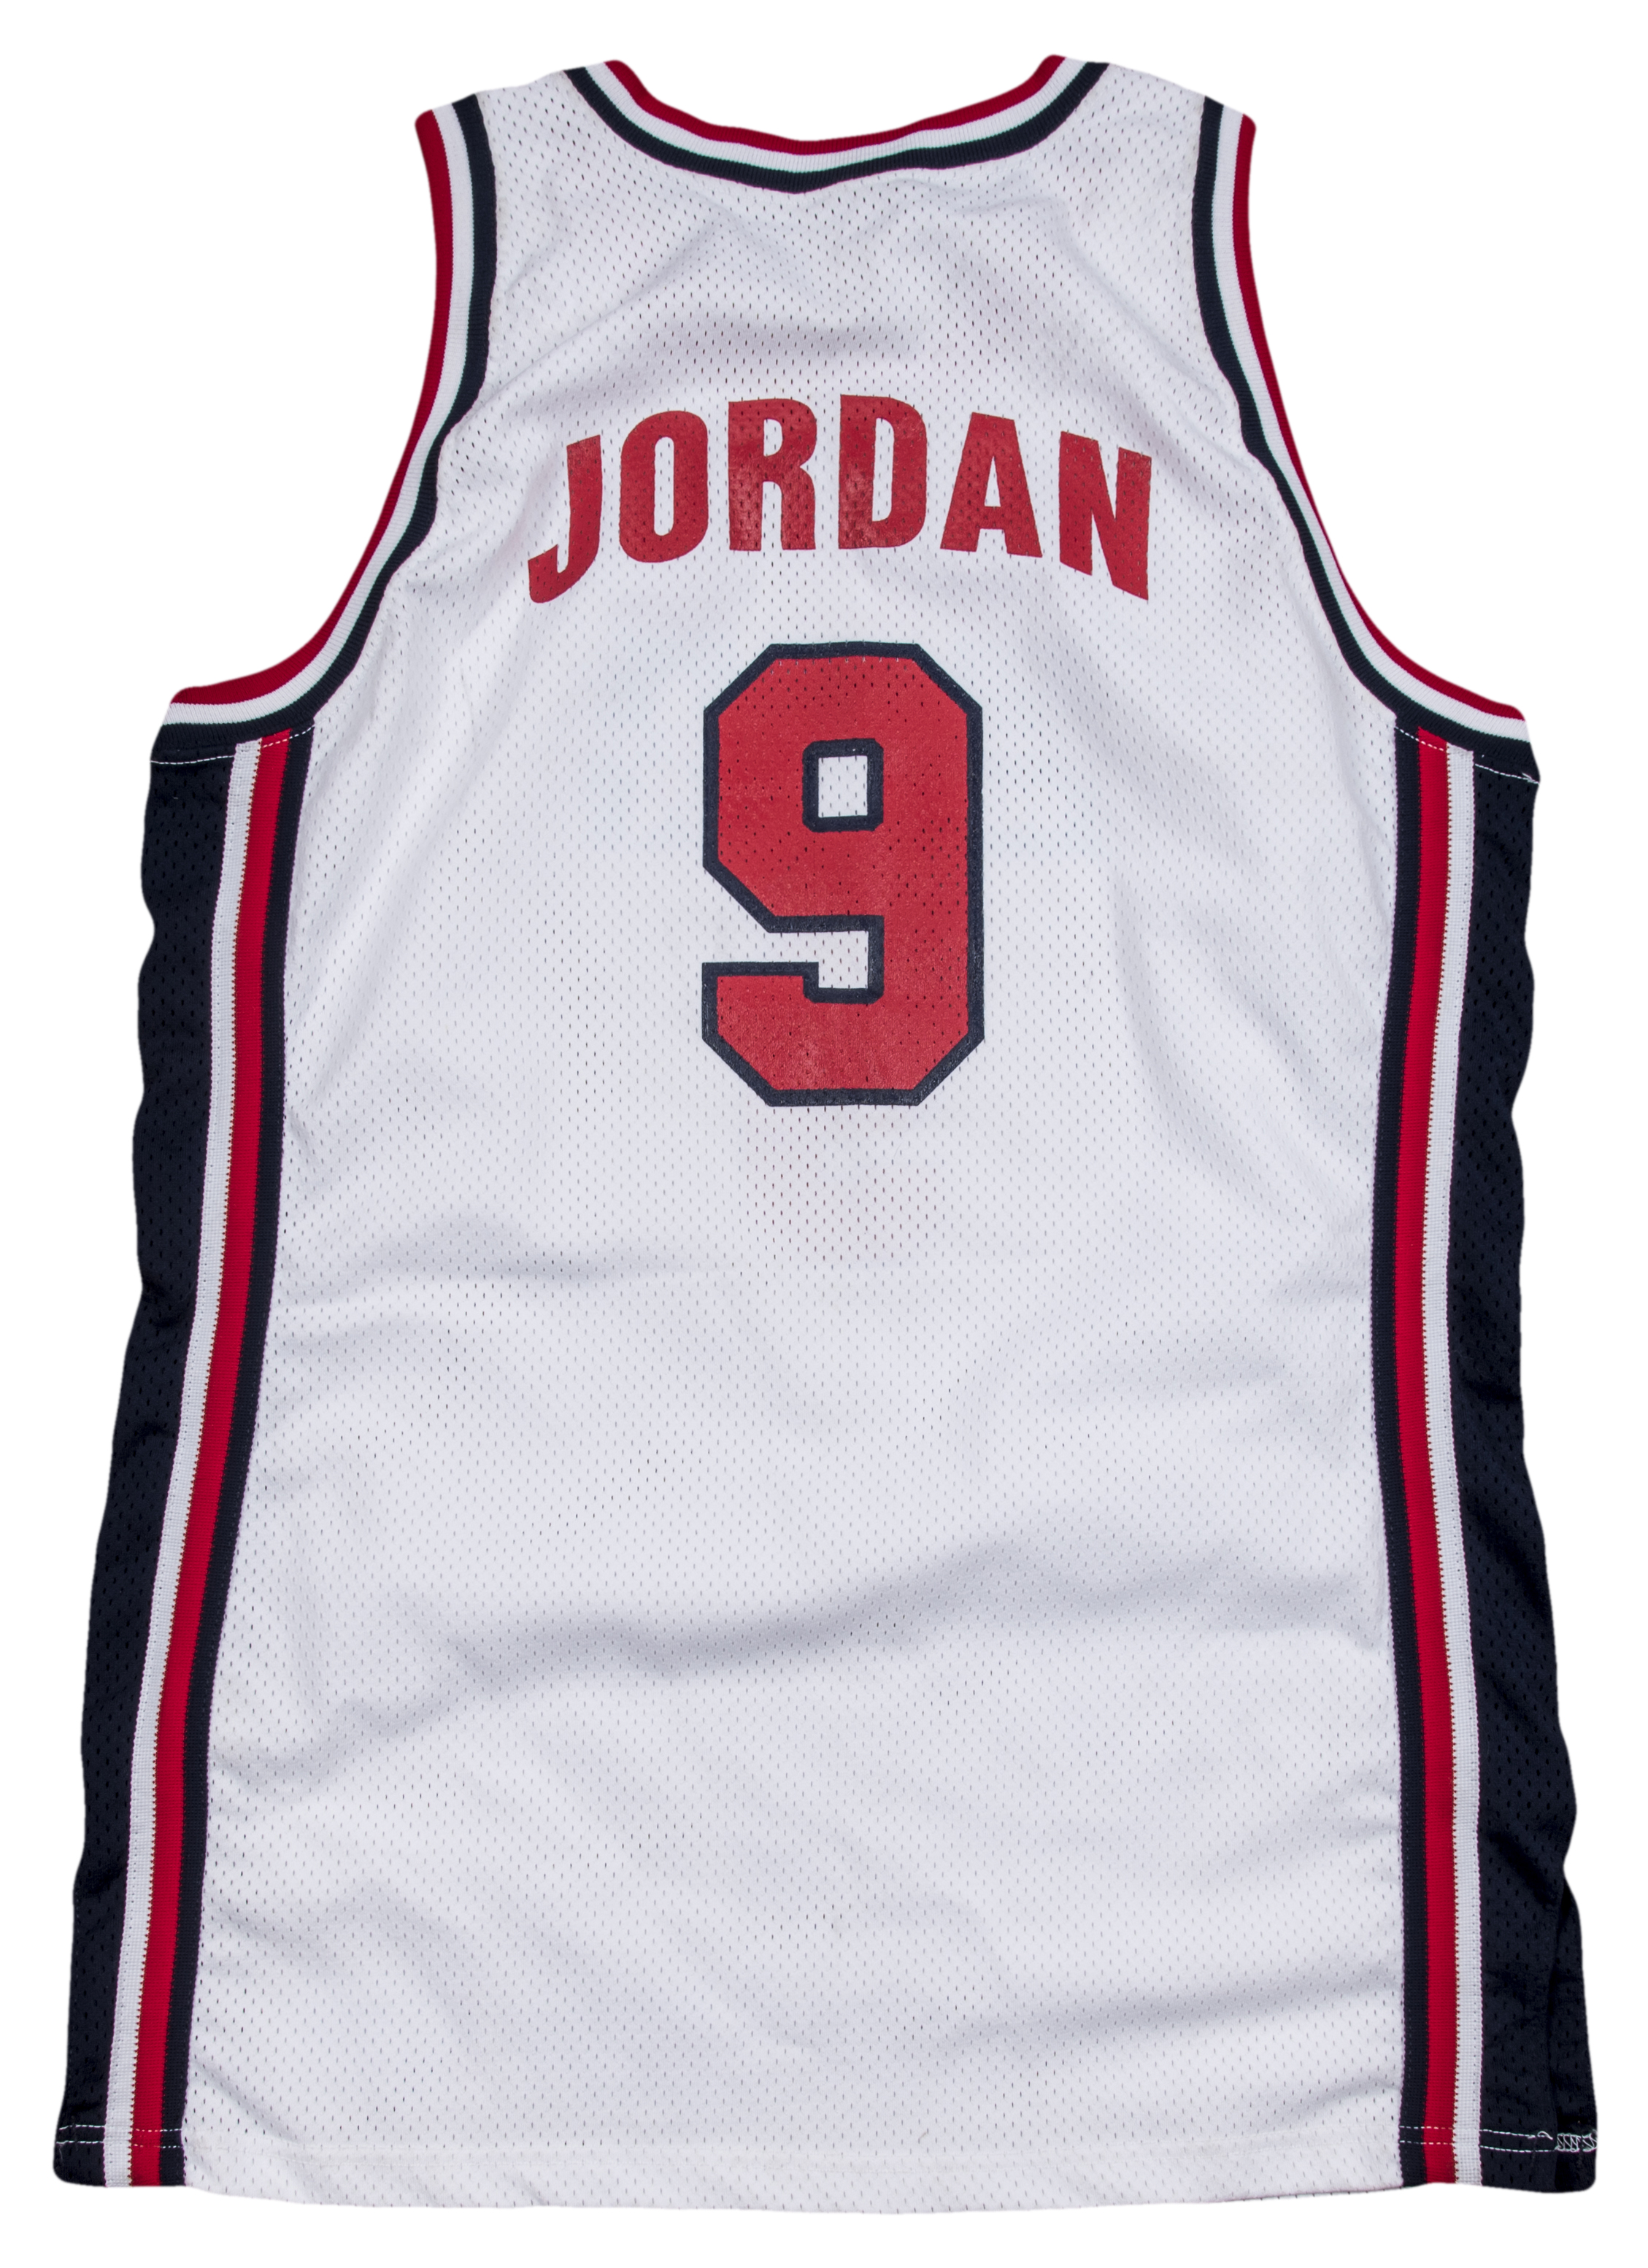 michael jordan jersey dream team